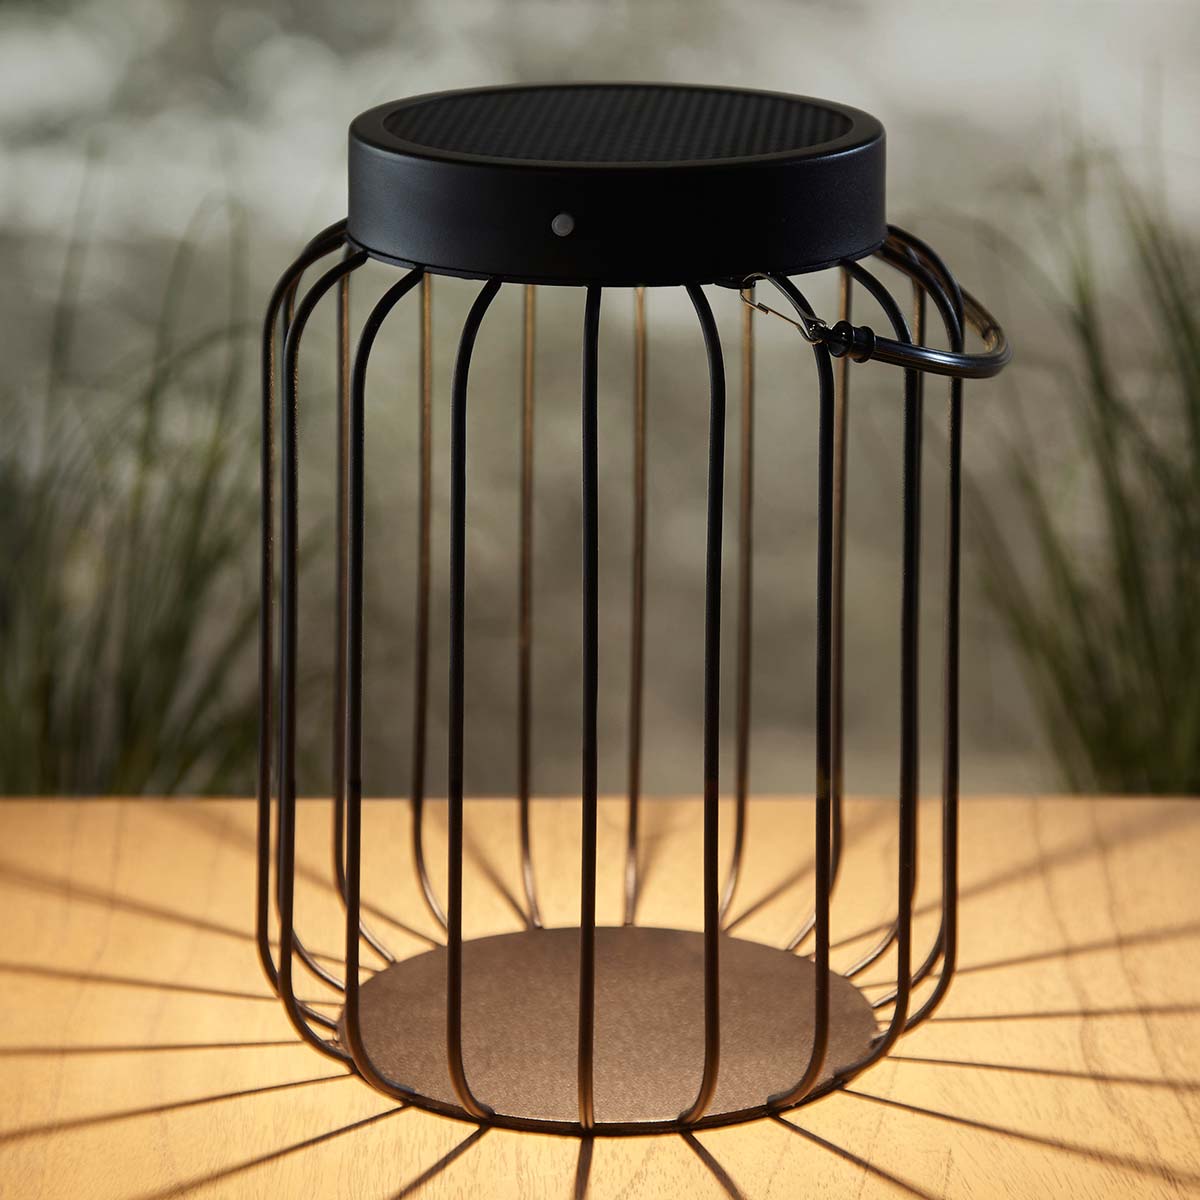 Endon Tropic Solar Powered Outdoor Table Lantern Black